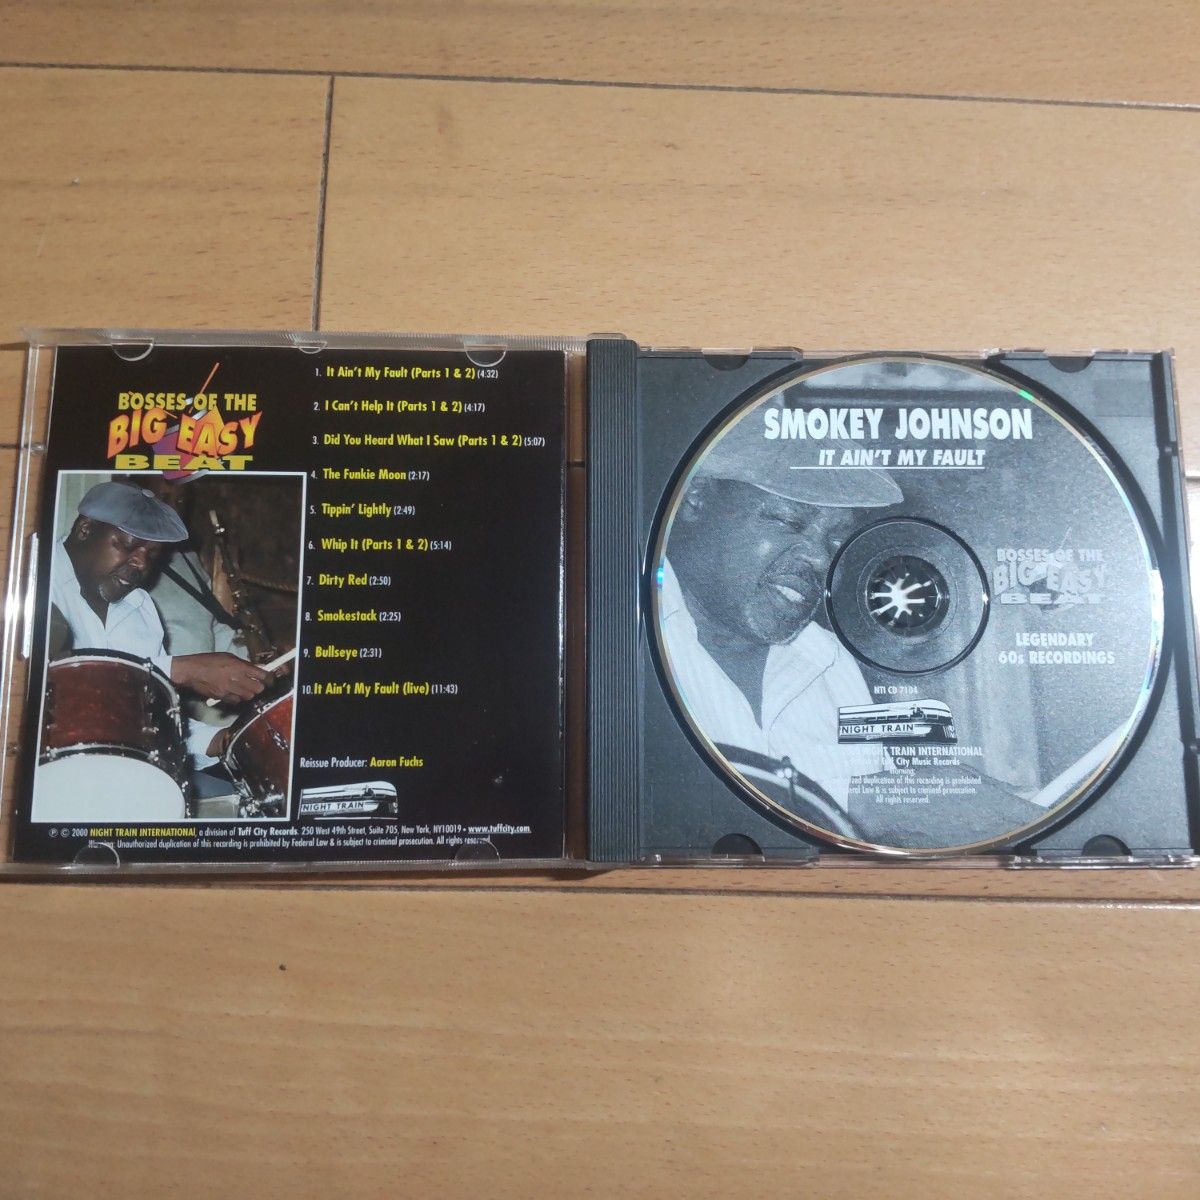 SMOKEY JOHNSON「IT AIN'T MY FAULT」中古CD 輸入盤 ニューオーリンズ レア盤